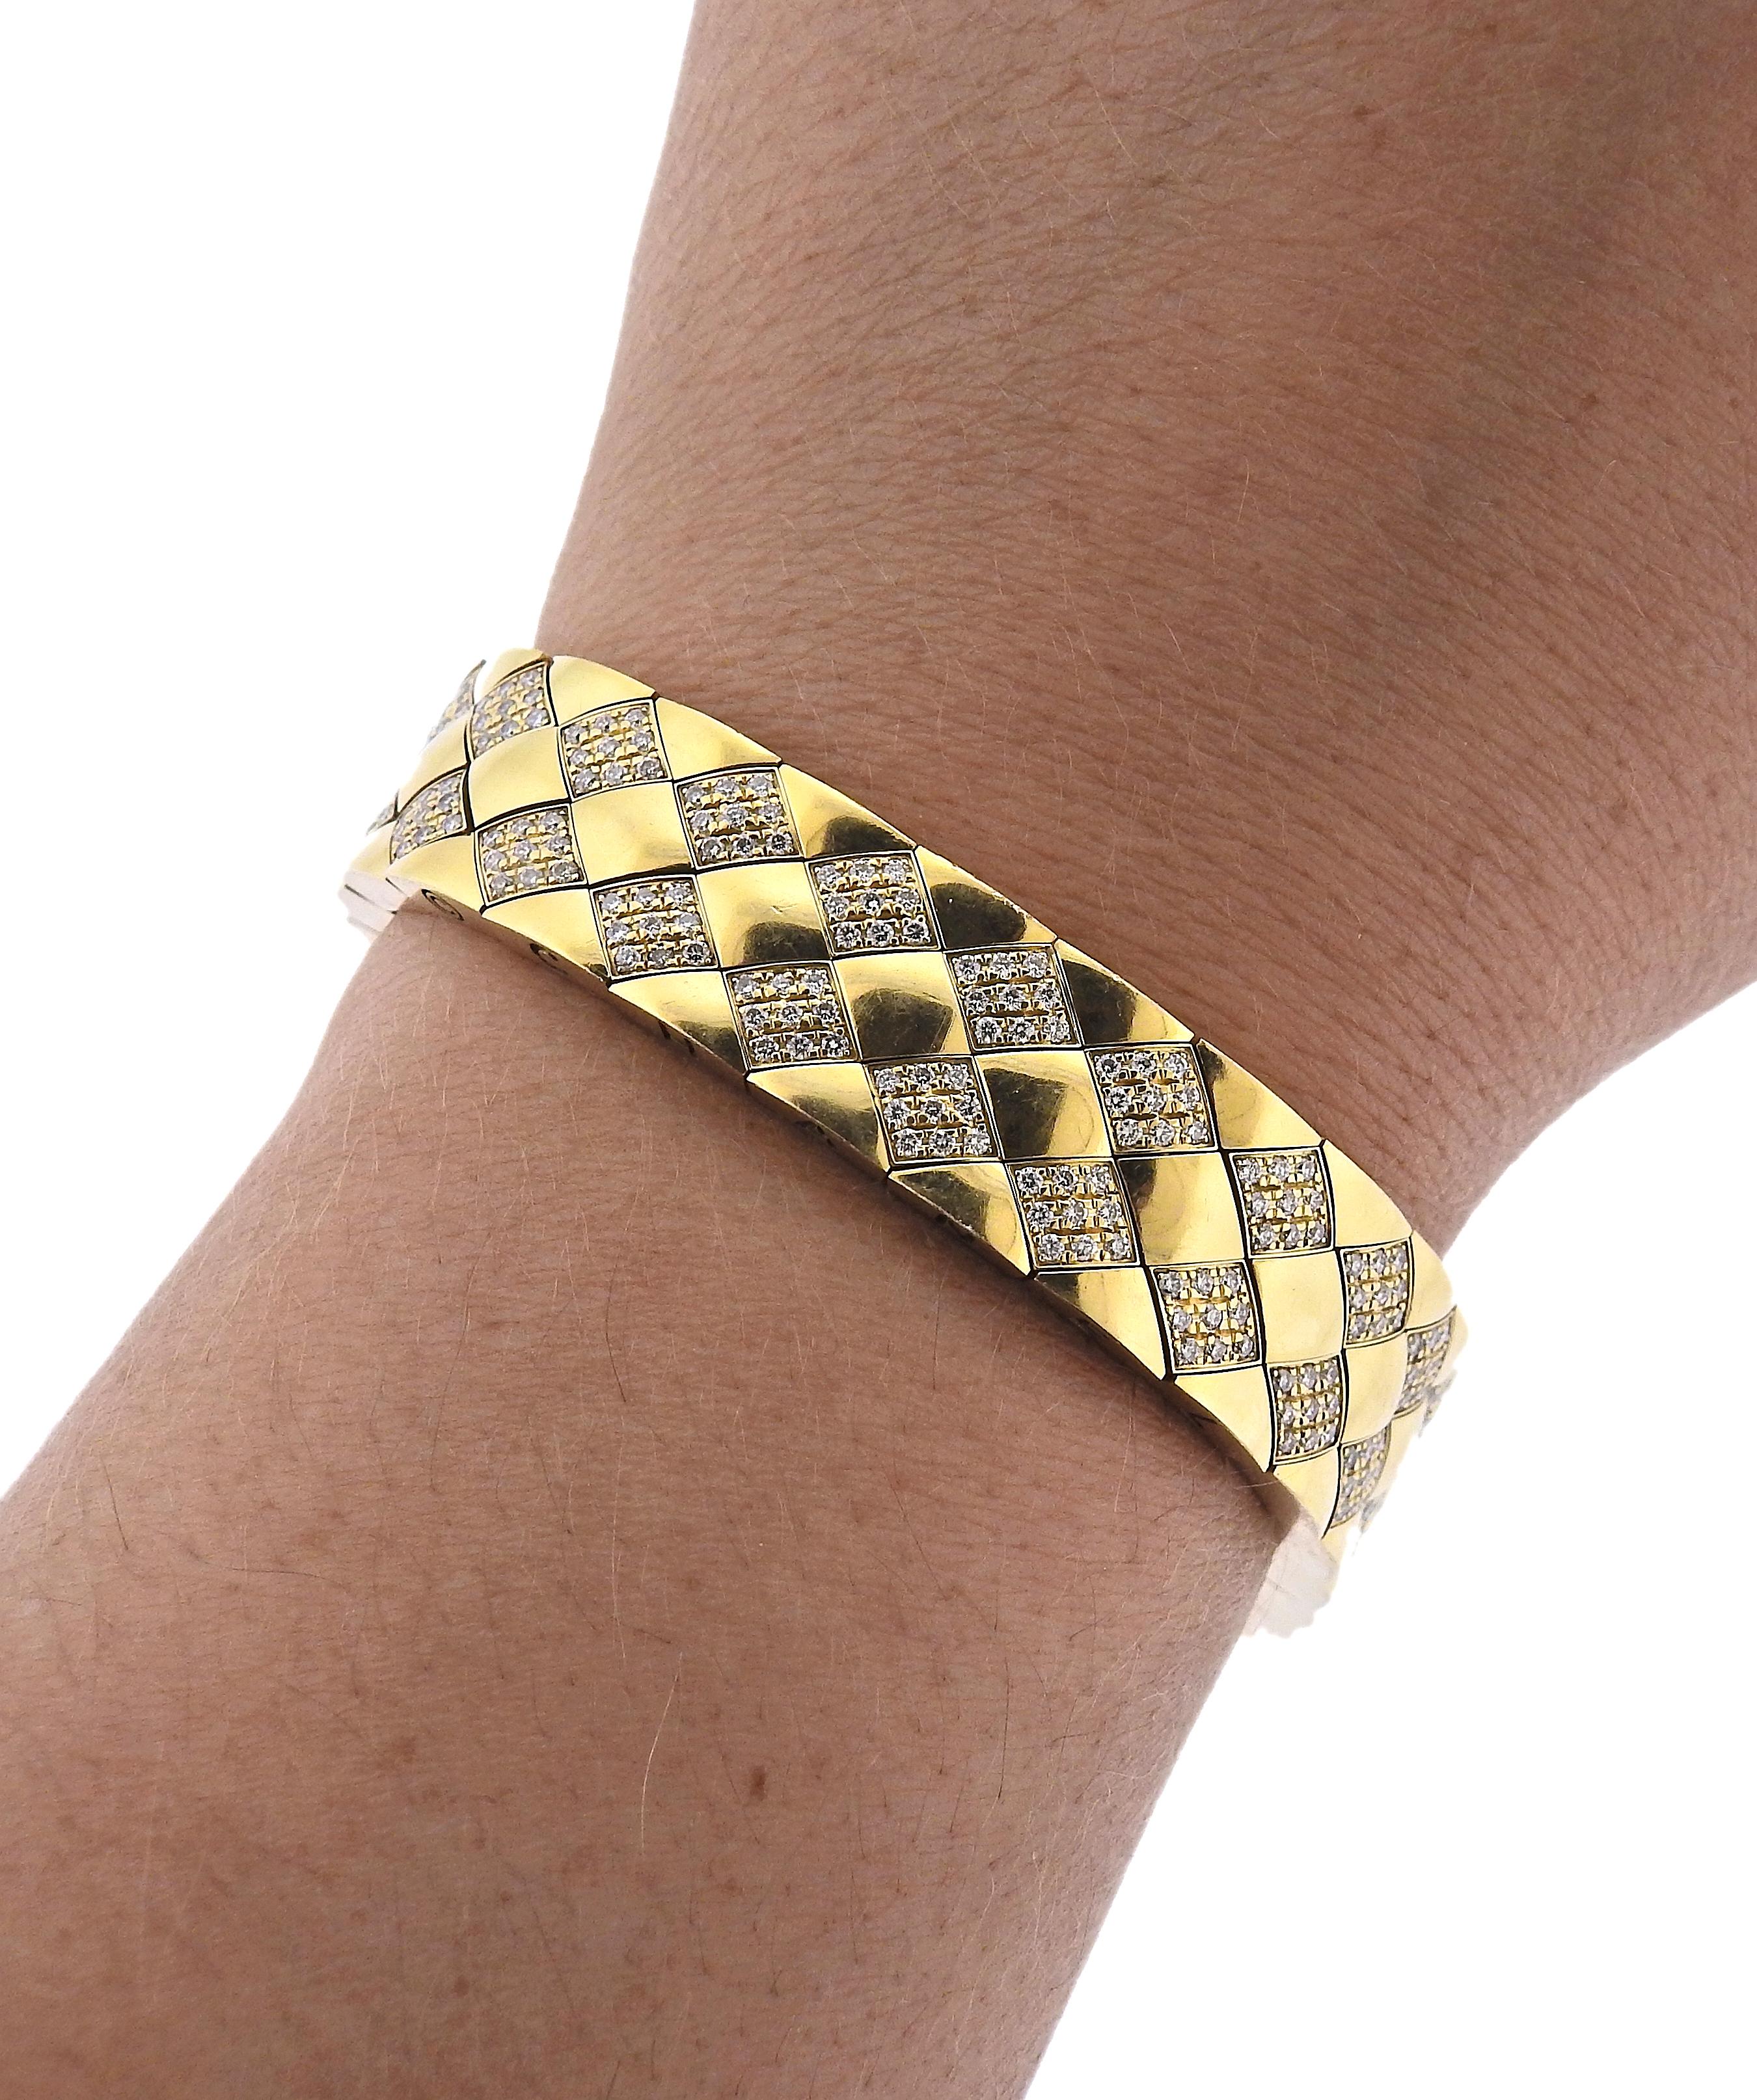 chanel gold bracelet with diamonds